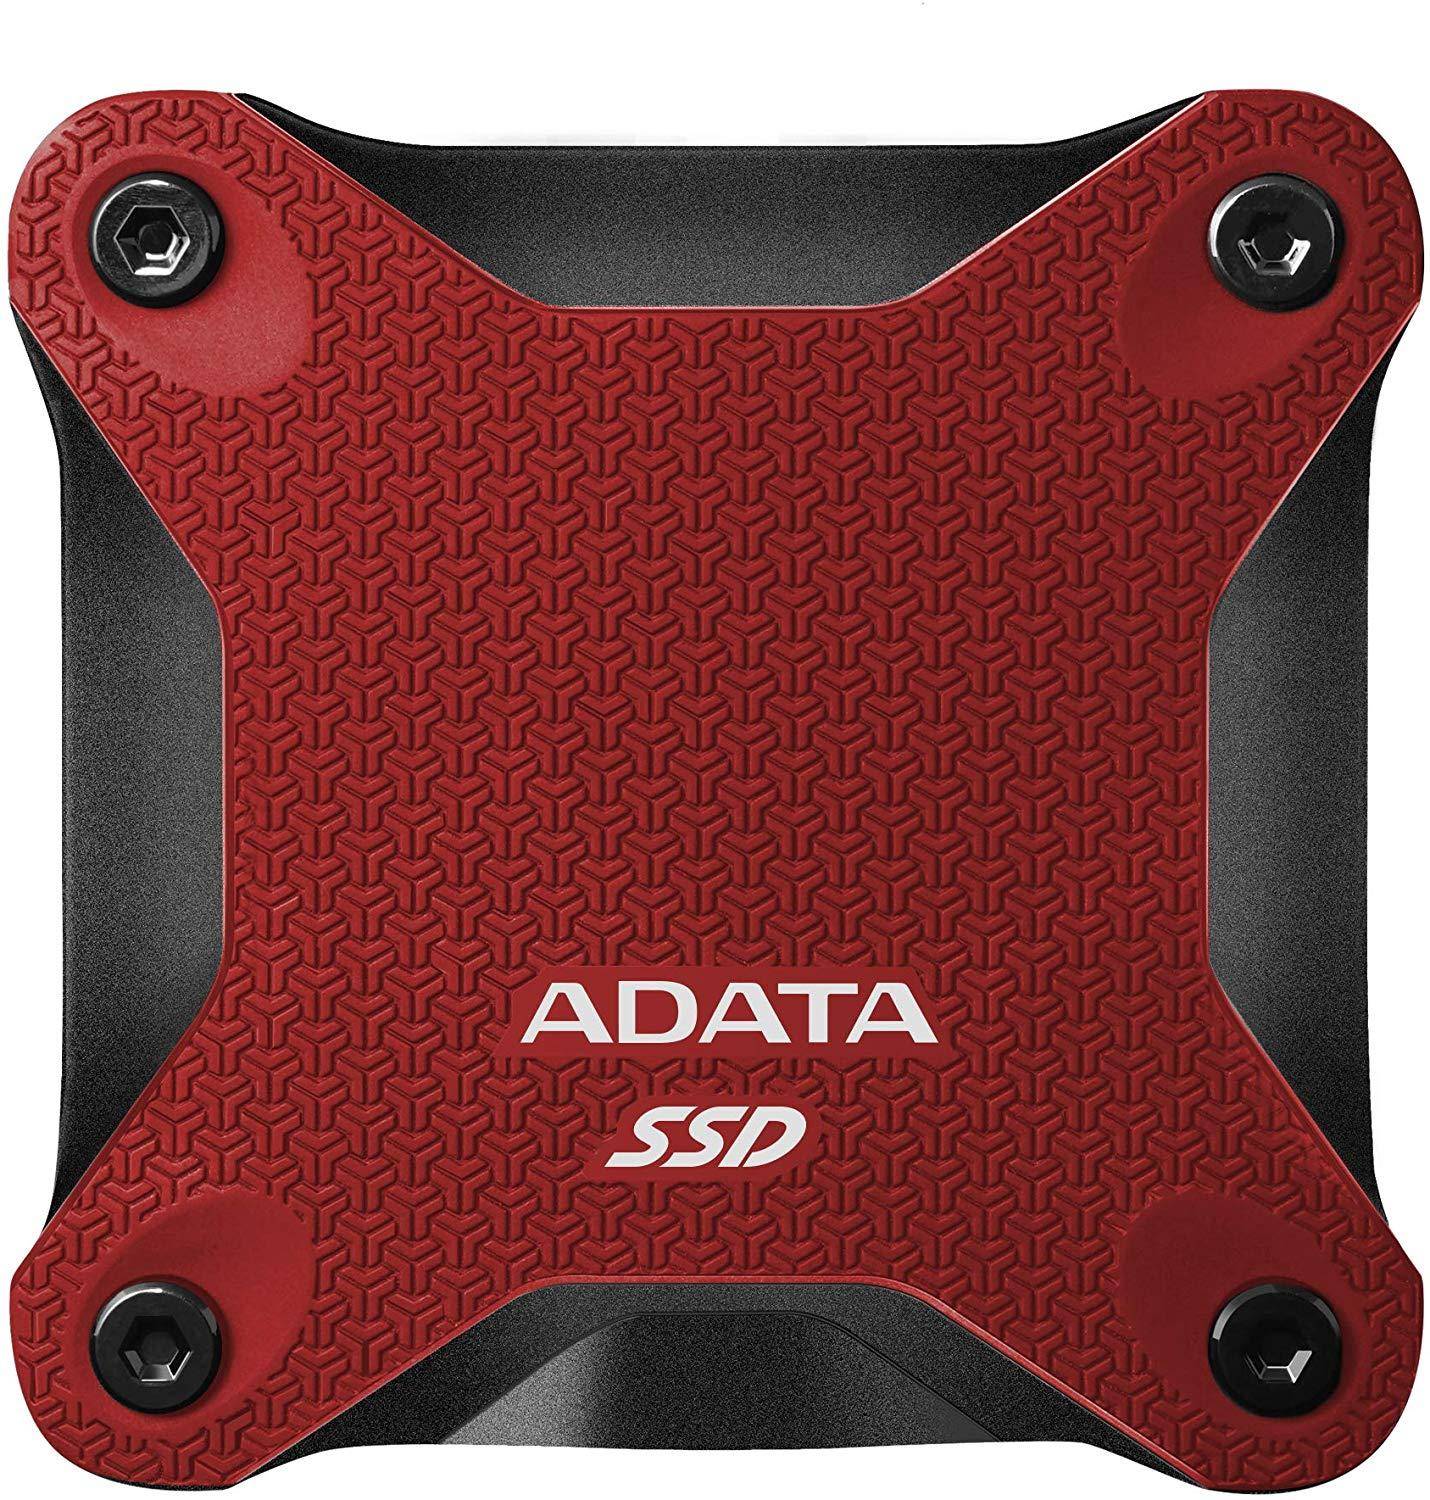 ADATA SD600Q 240GB Military Grade Portable Solid State Drive zoom image